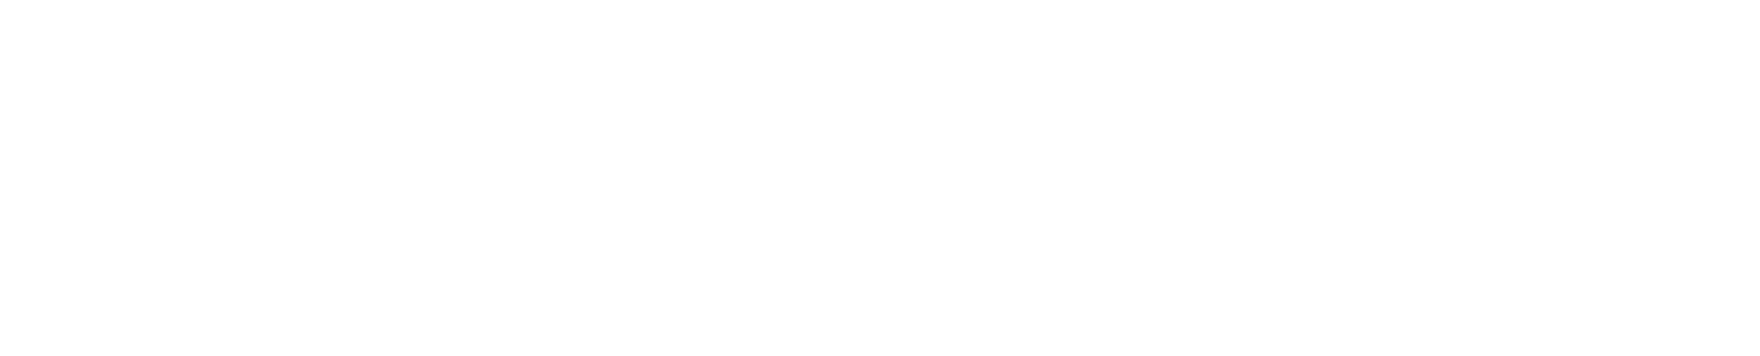 Tsushima Tourist Map